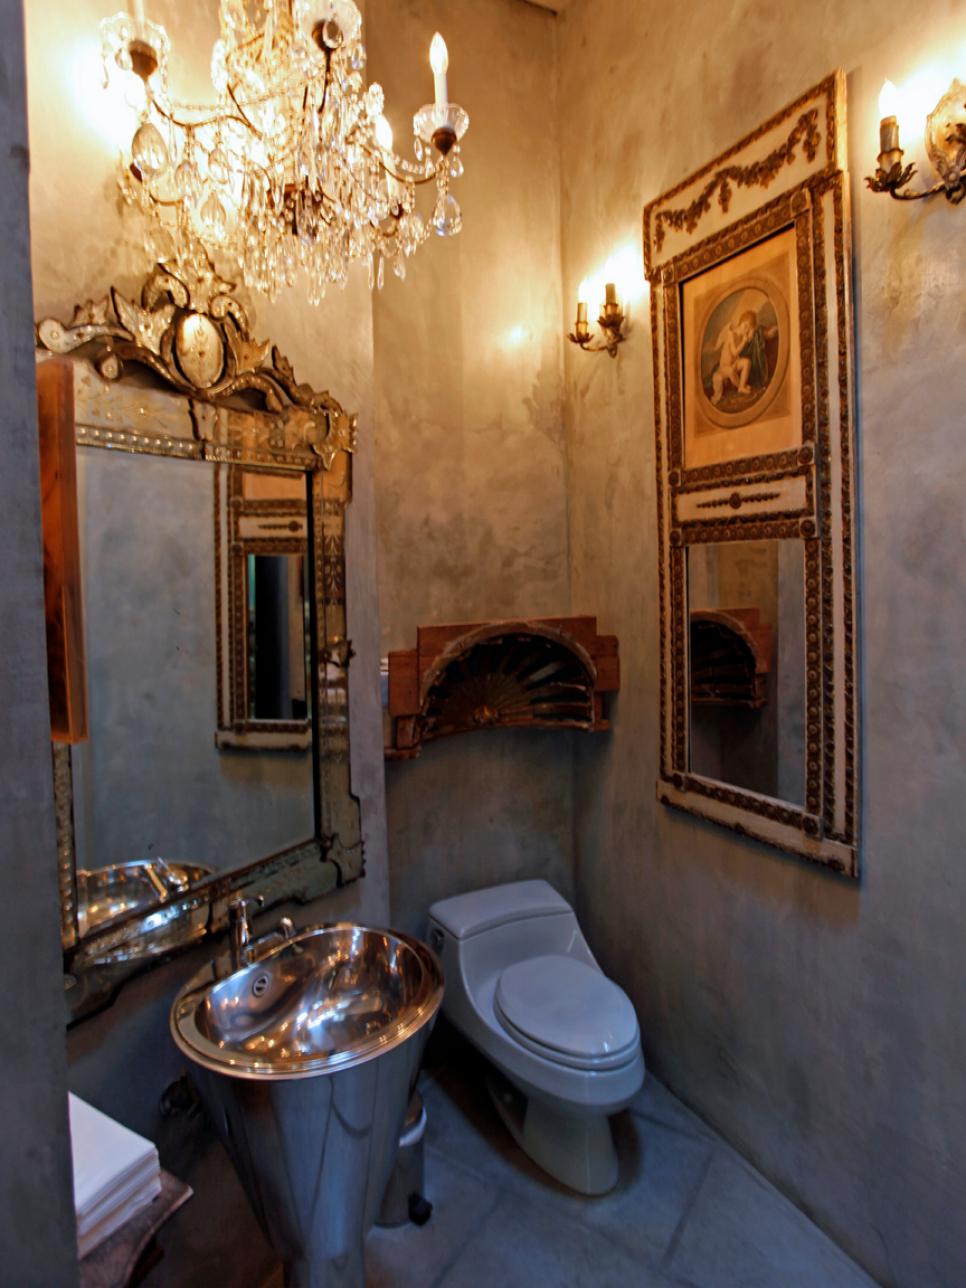 Vintage Bathroom With Chandelier and Pedestal Sink